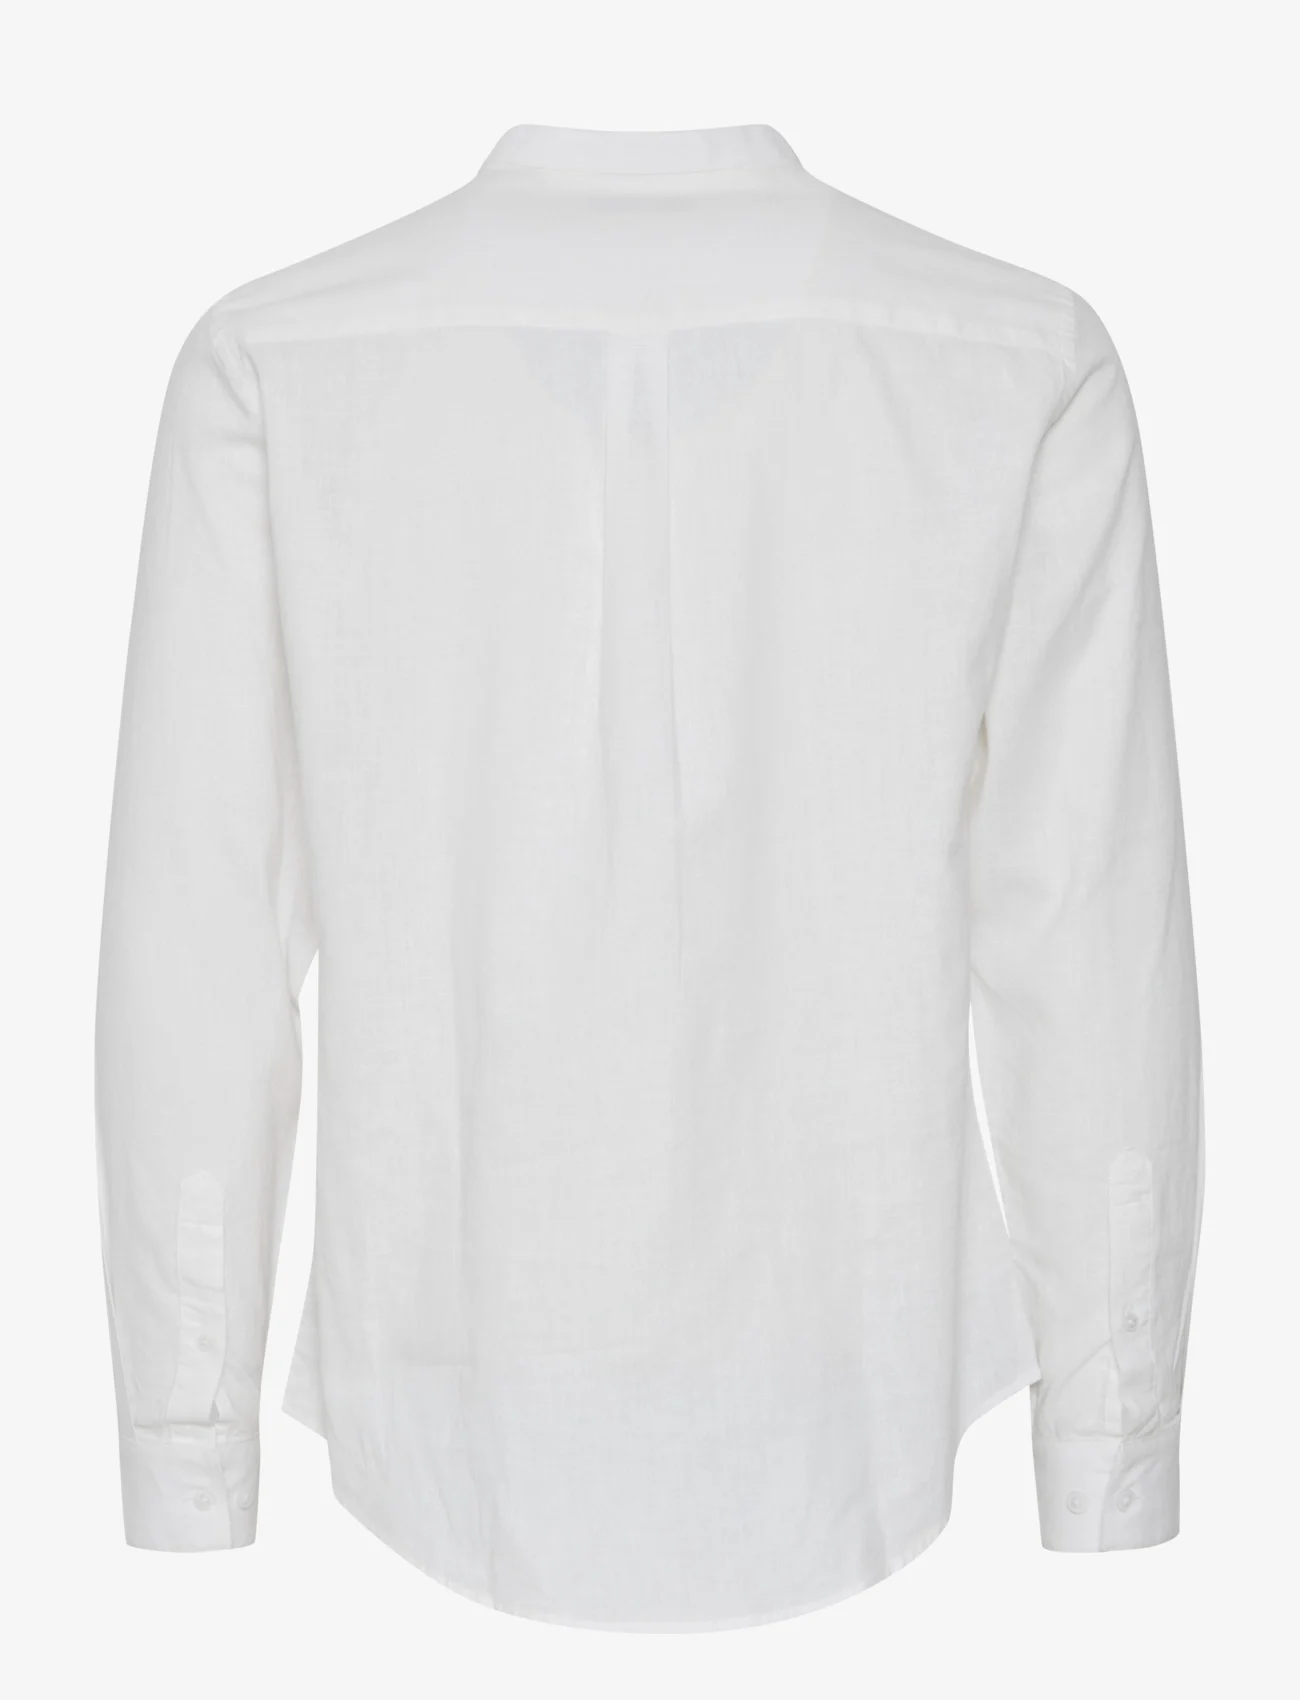 Casual Friday - CFAnton 0053 CC LS linen mix shirt - lininiai marškiniai - snow white - 1